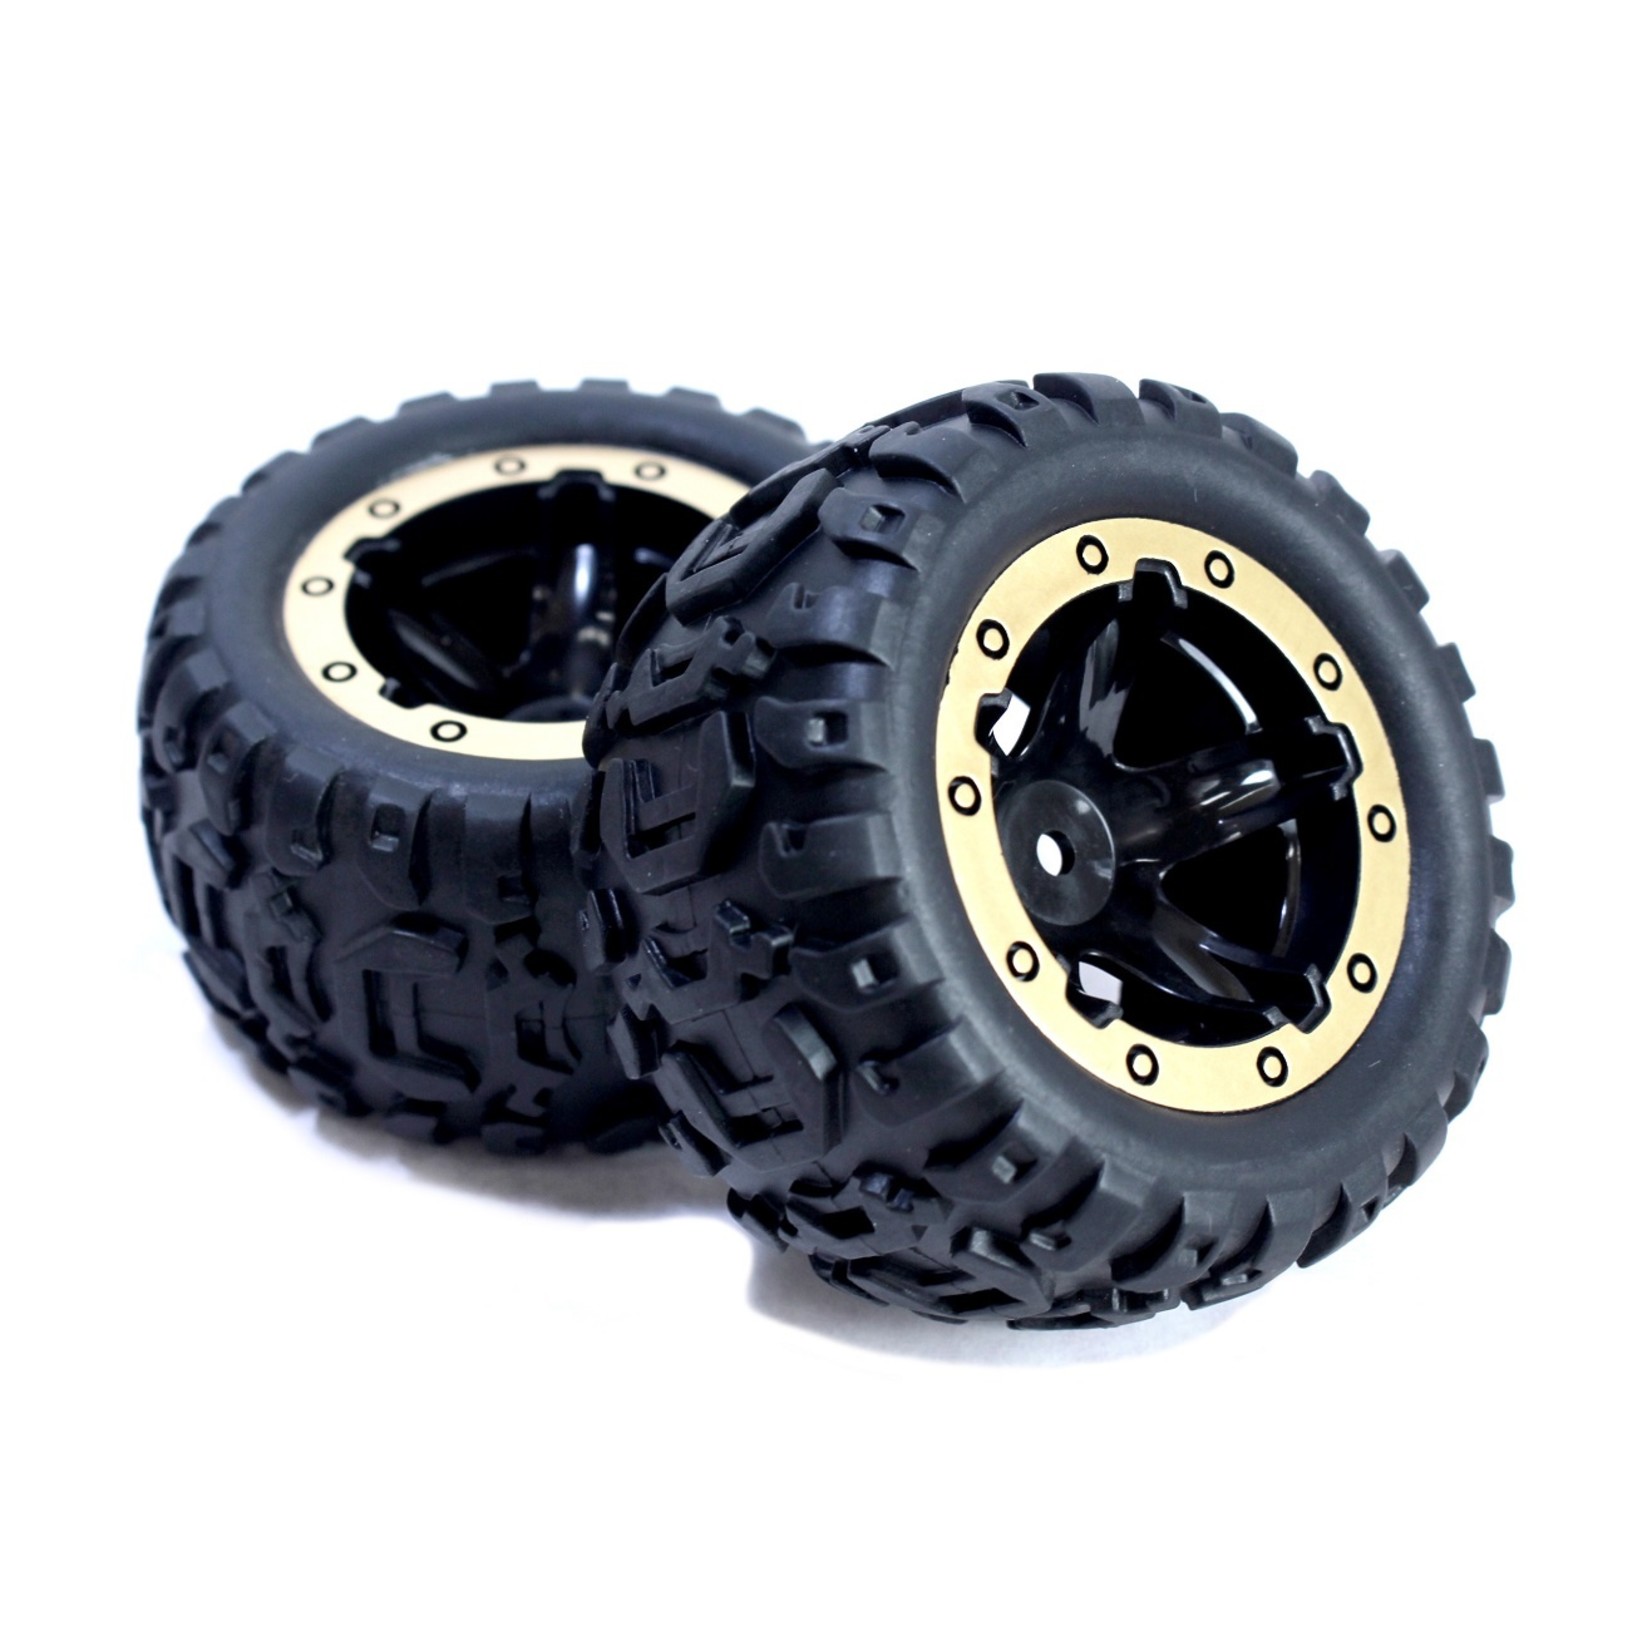 Blackzon Slyder MT Wheels/Tires Assembled (Black/Gold)